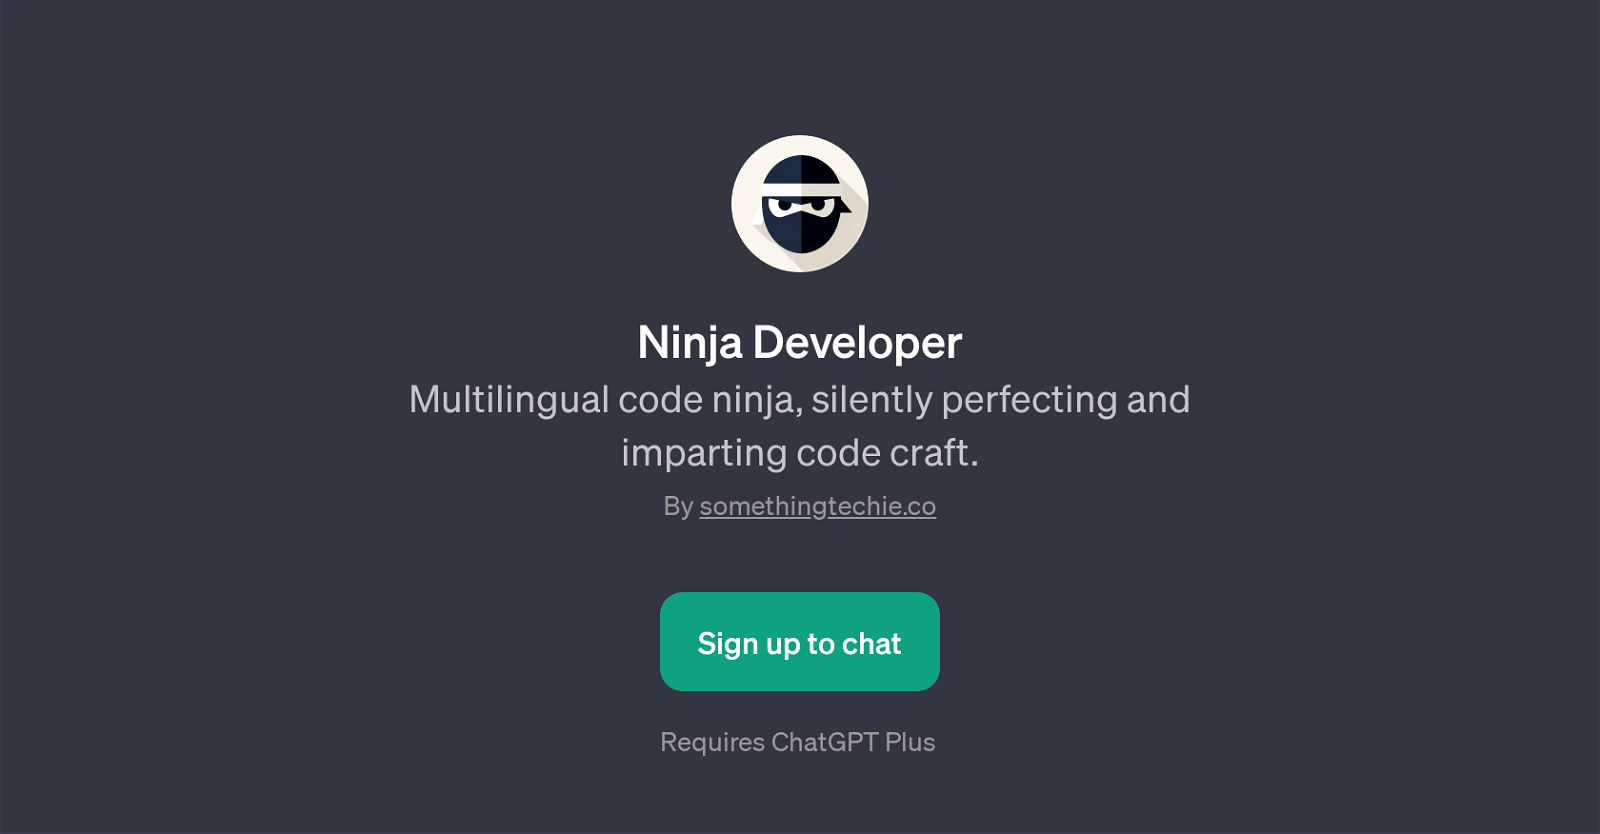 Ninja Developer website